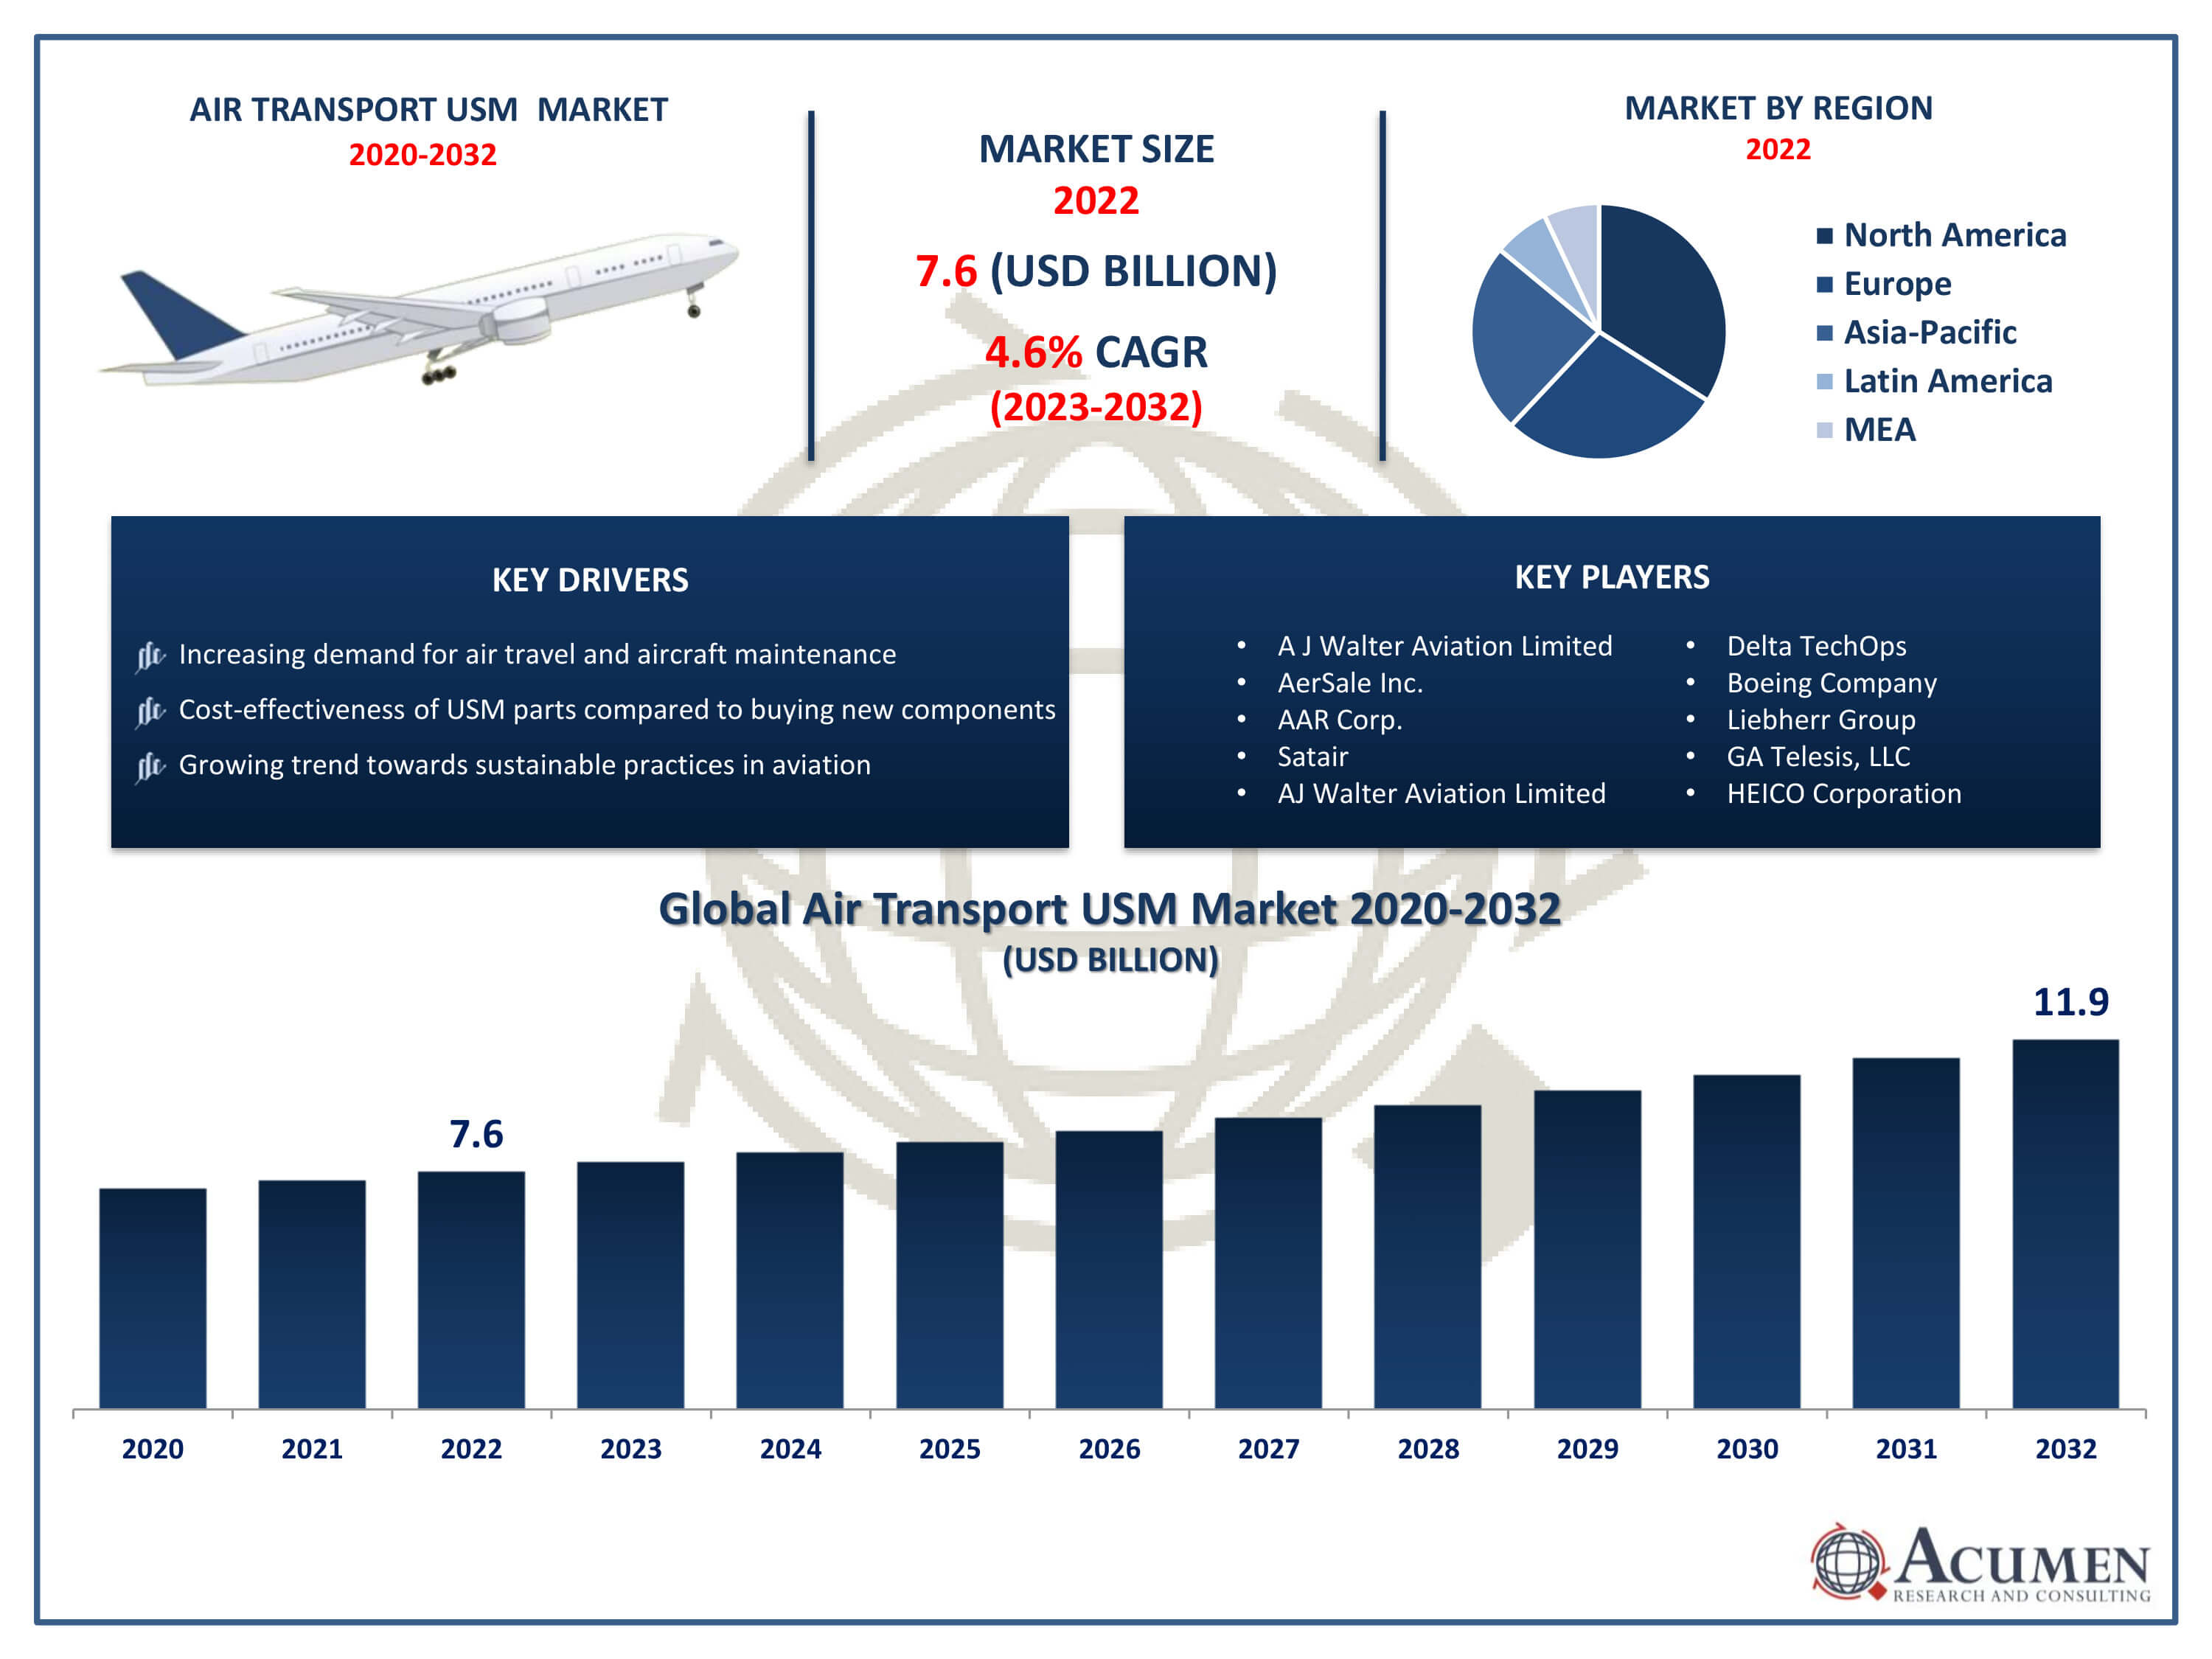 Air Transport USM Market Trends